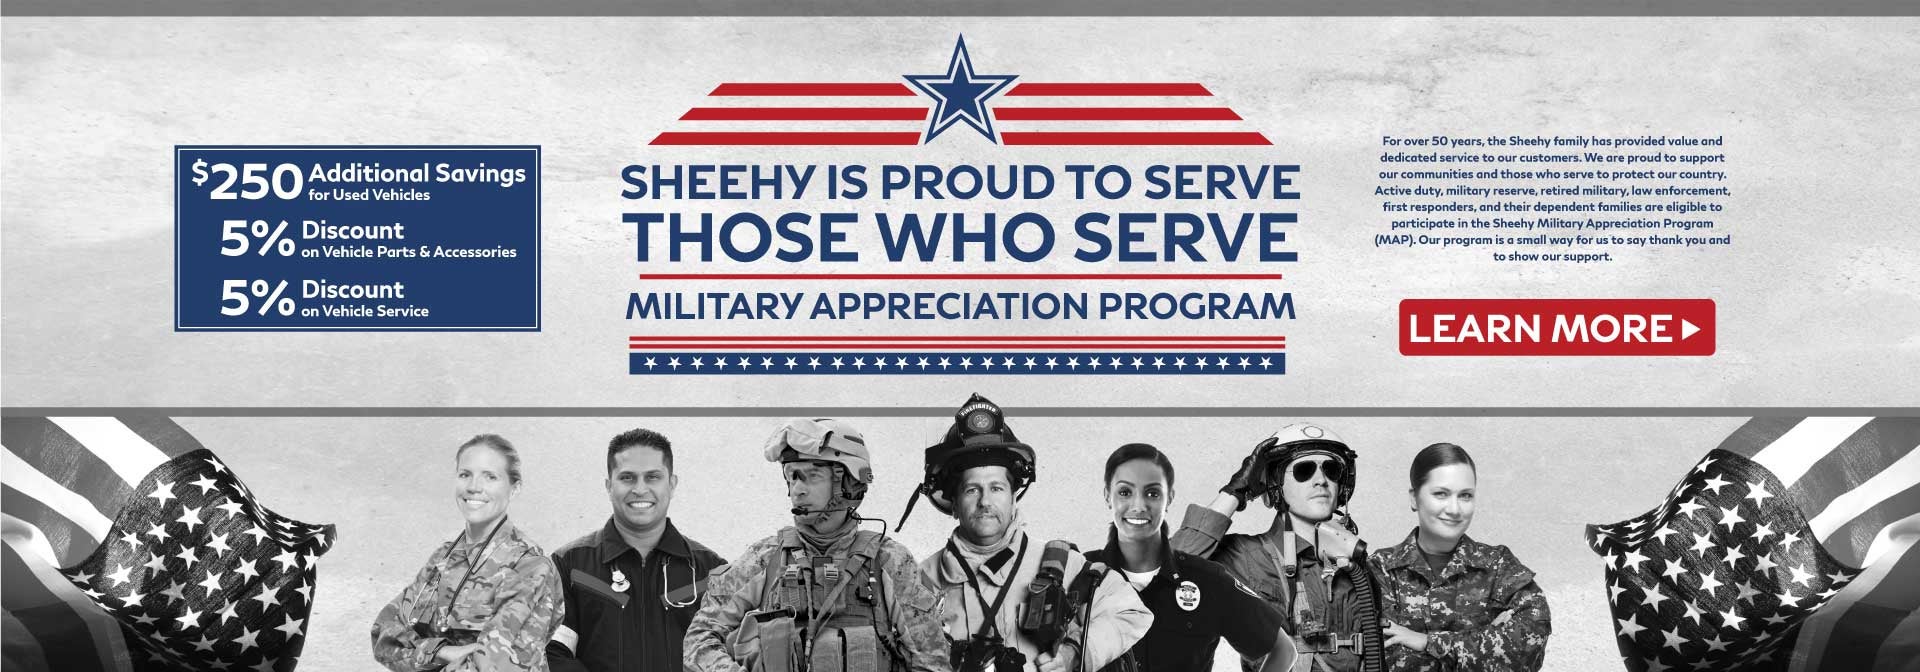 Sheehy Military Appreciation Program